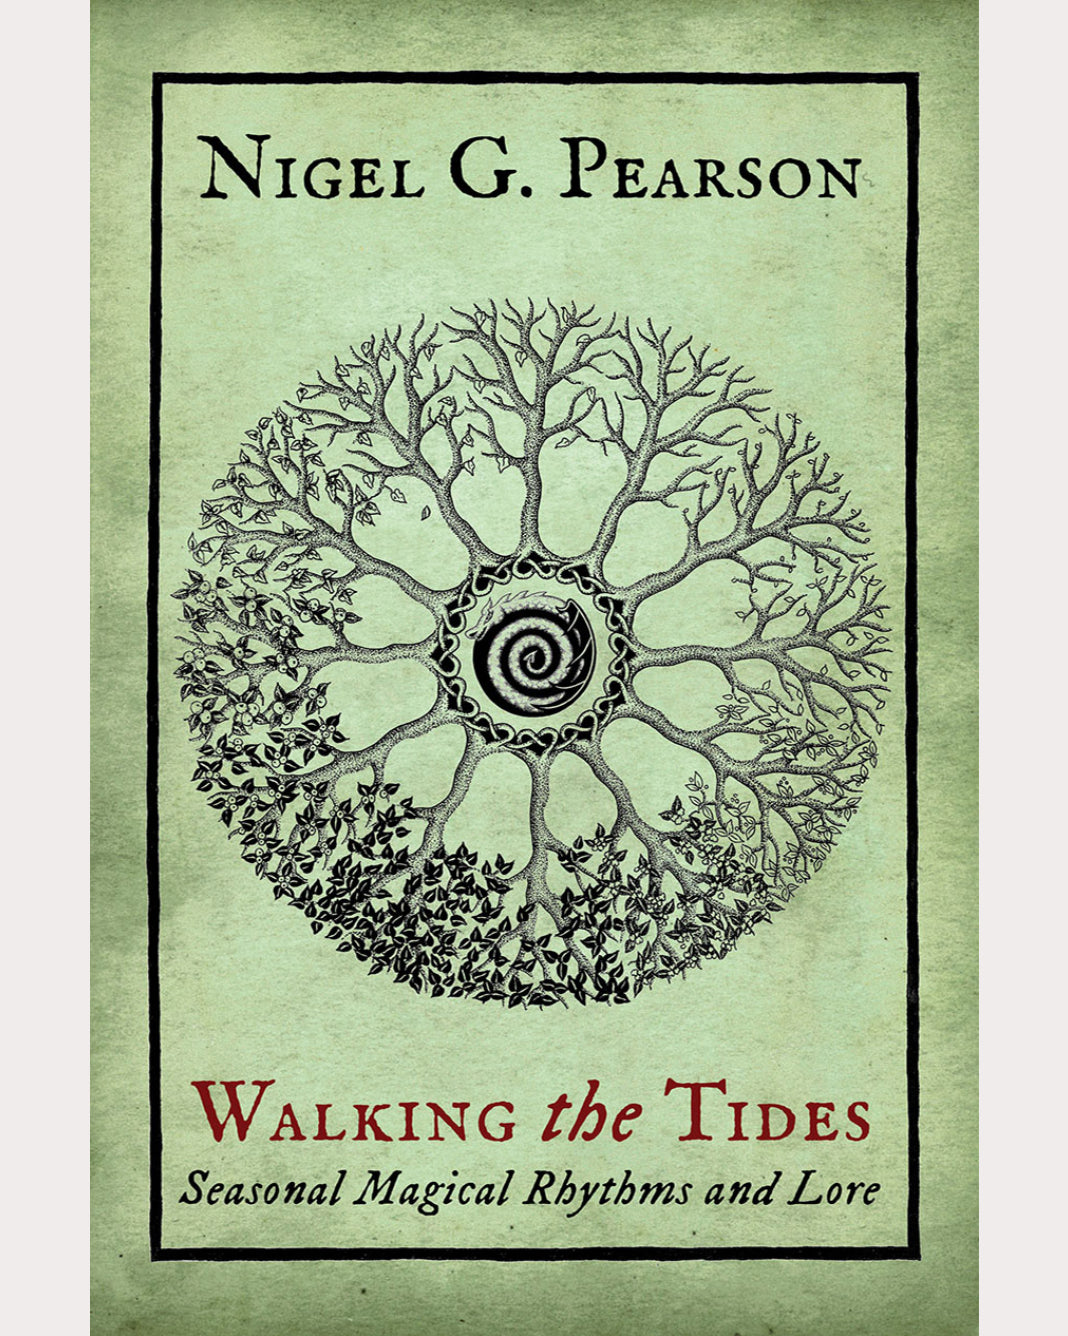 Walking the Tides | Seasonal Magical Rhythms and Lore